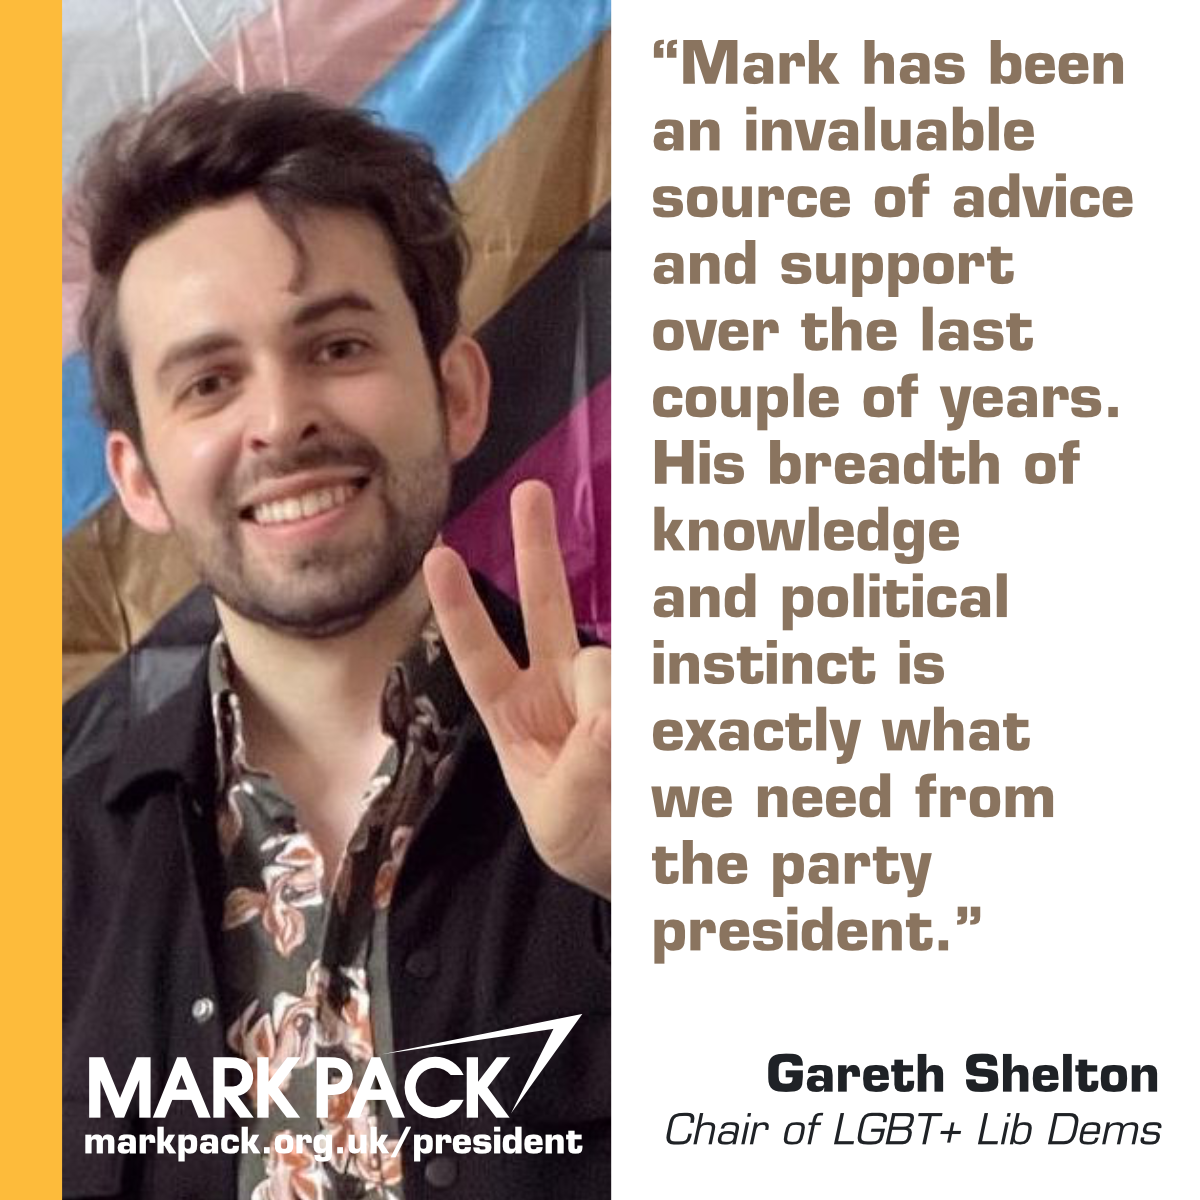 Gareth Shelton endorses Mark Pack